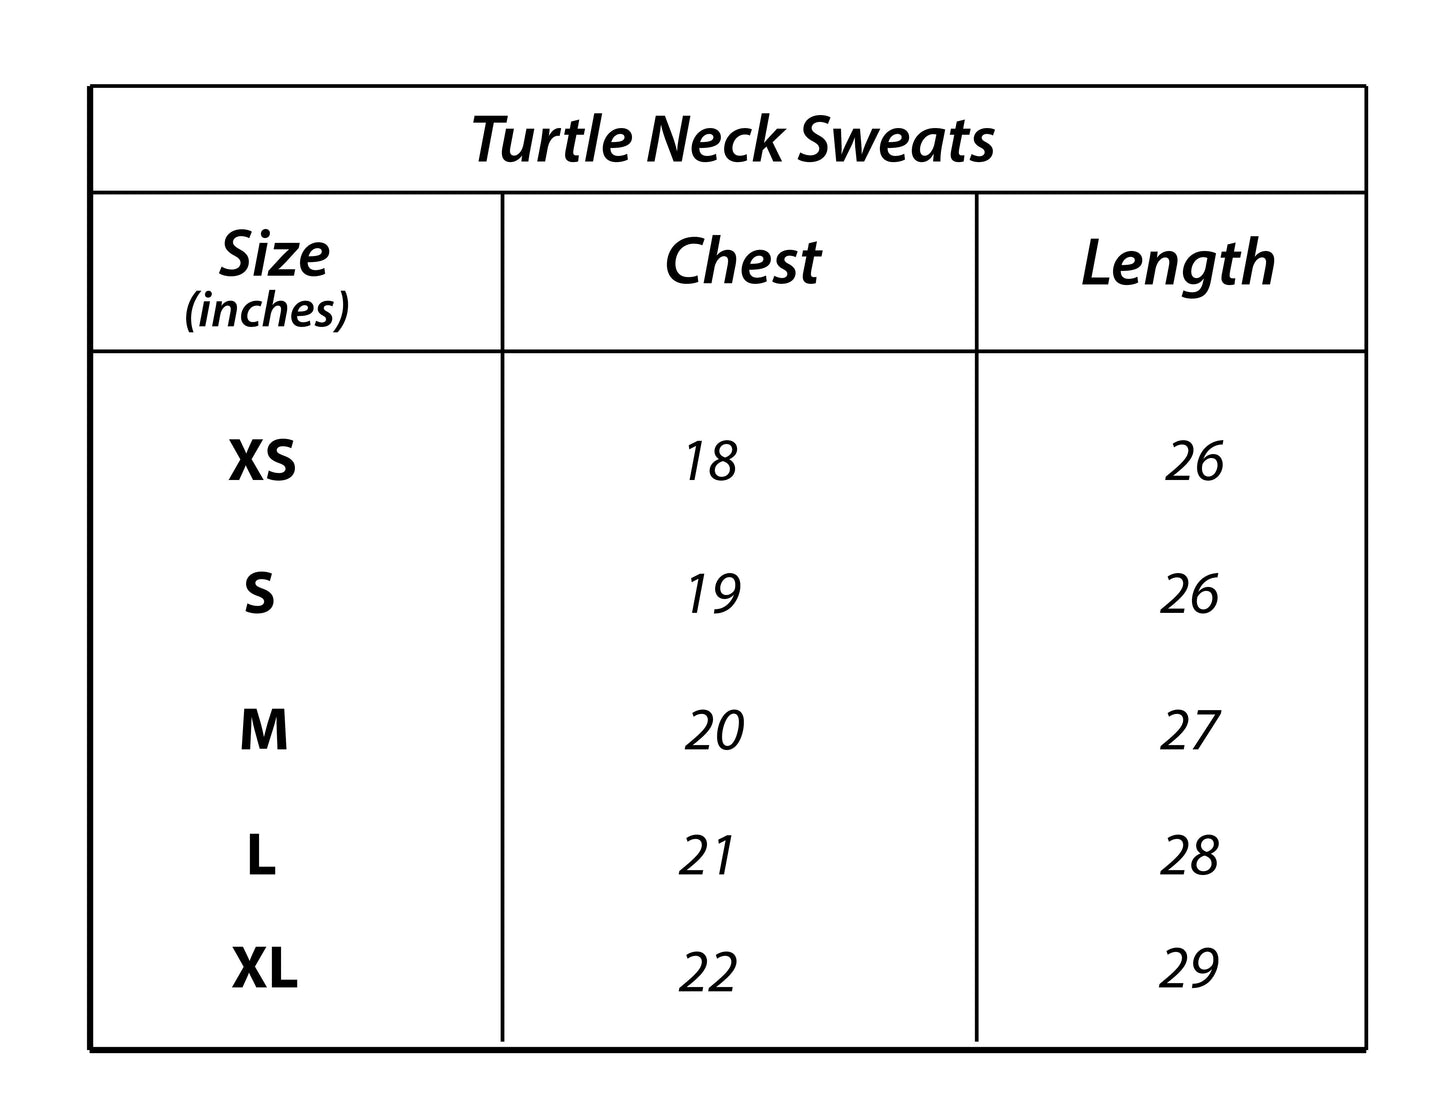 Z.A.R.A Premium Turtle Neck Sweats (White)